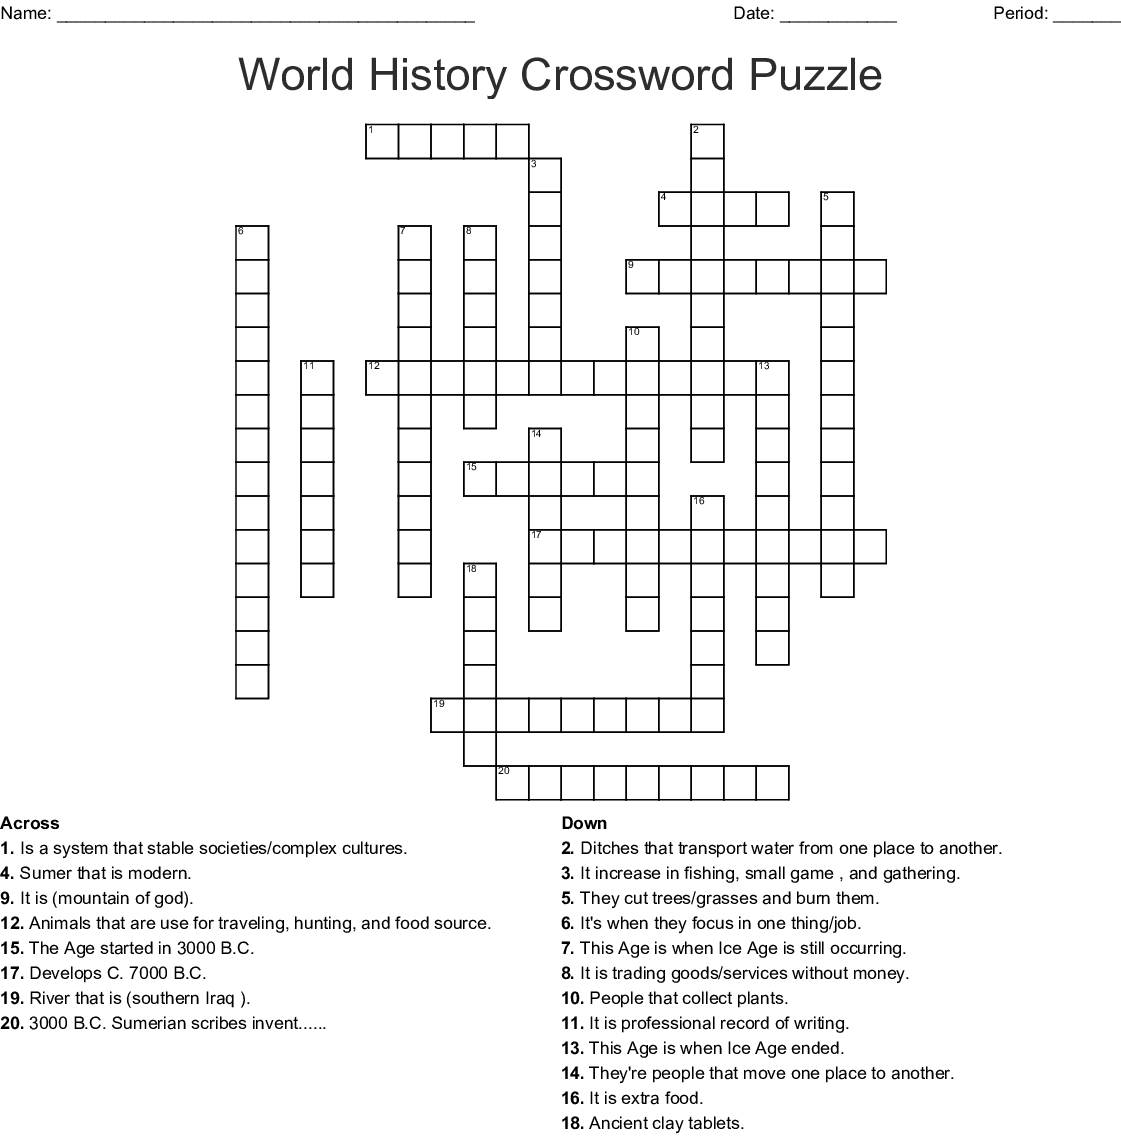 World History Crossword Puzzle WordMint